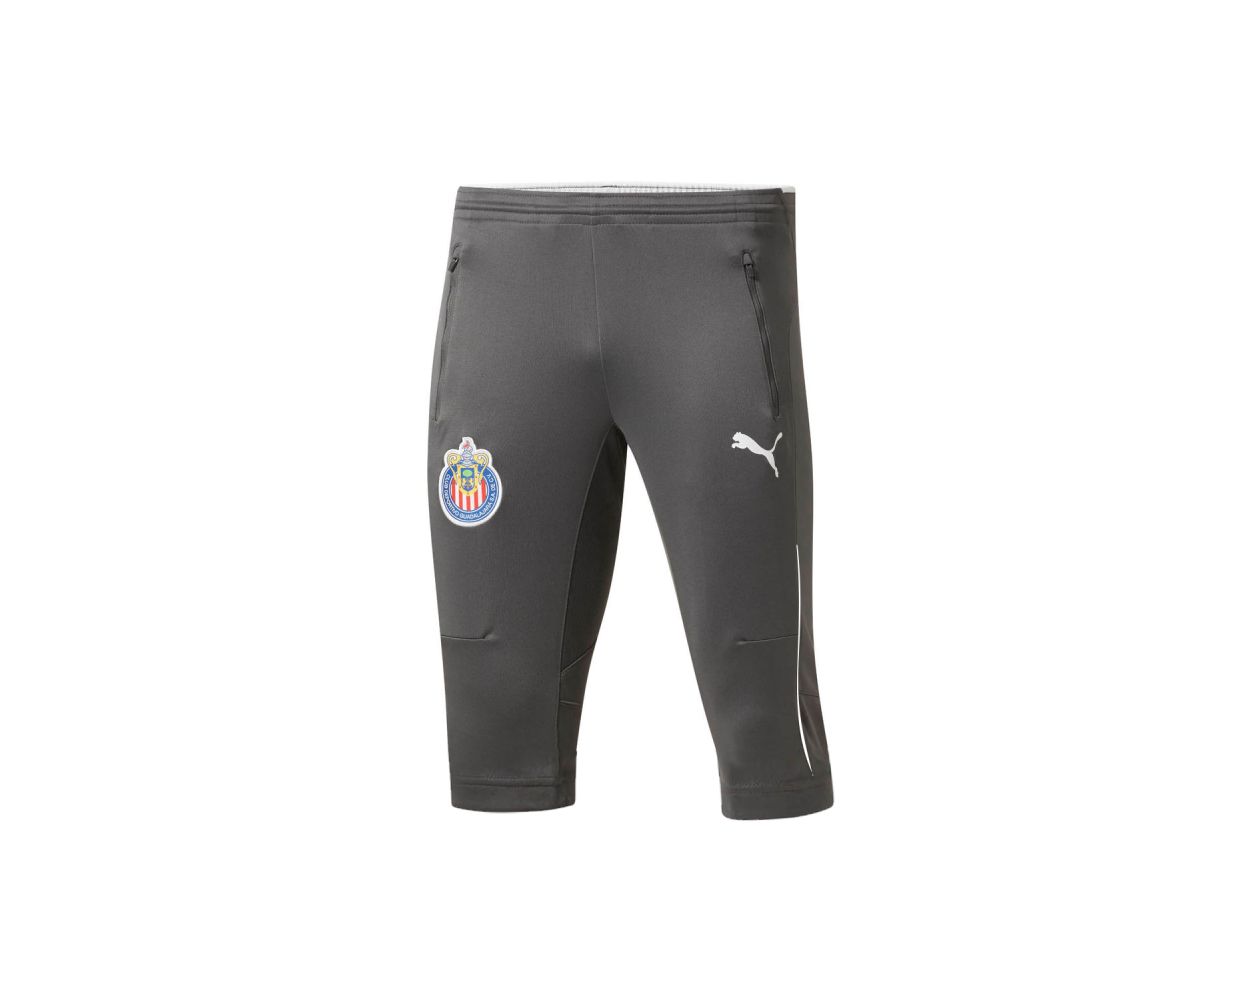 Puma Chivas 3/4 Training Pants - Grey